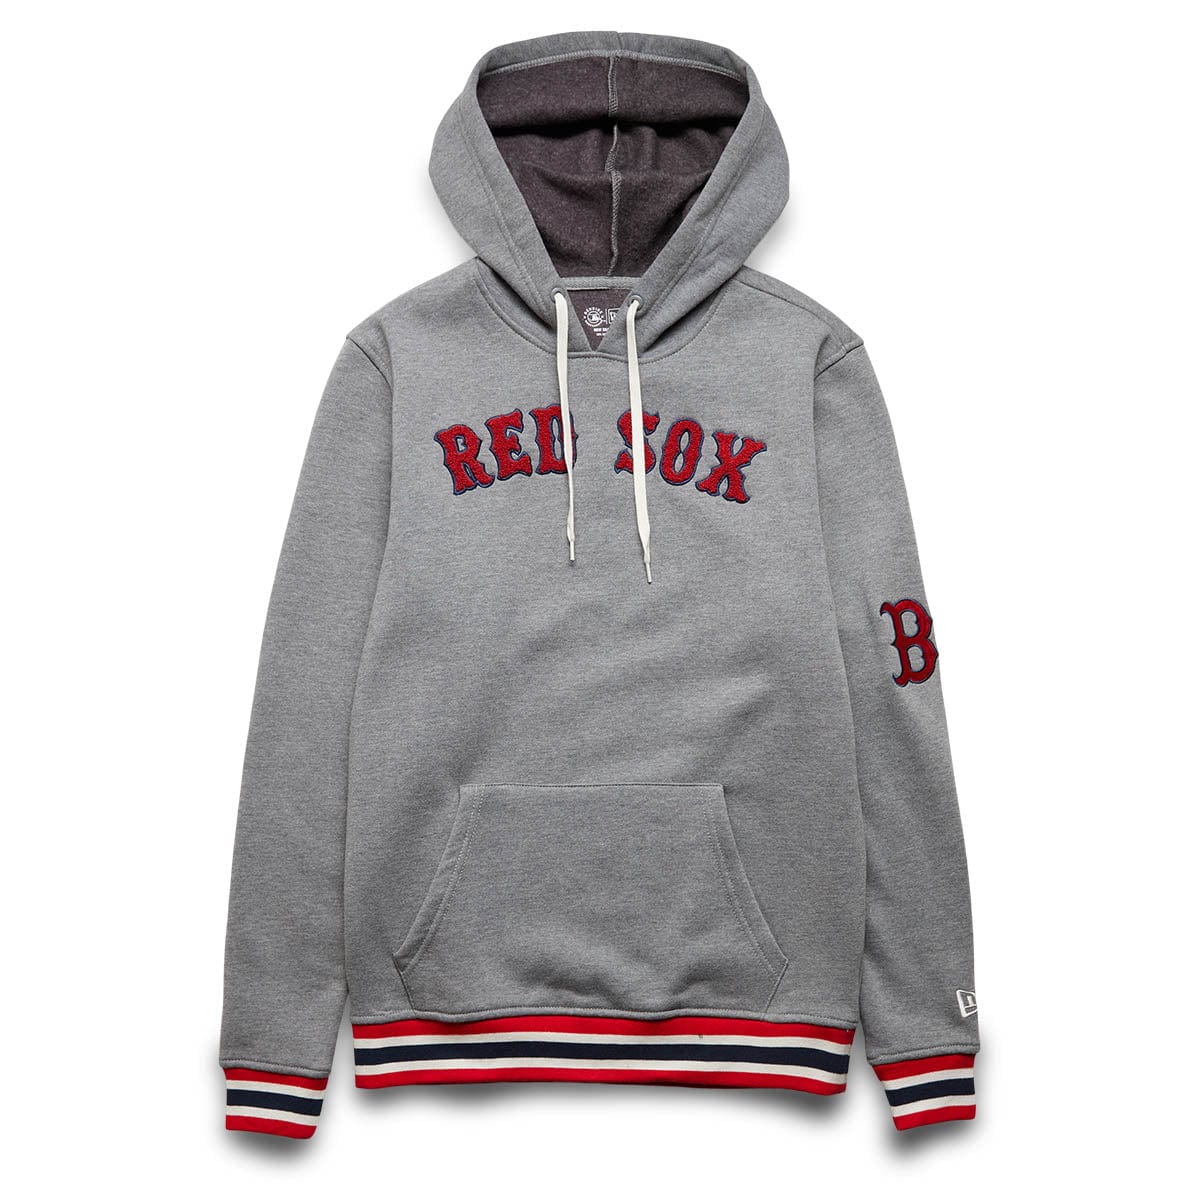 Boston Red Sox Hoodies, Red Sox Sweatshirts, Fleece